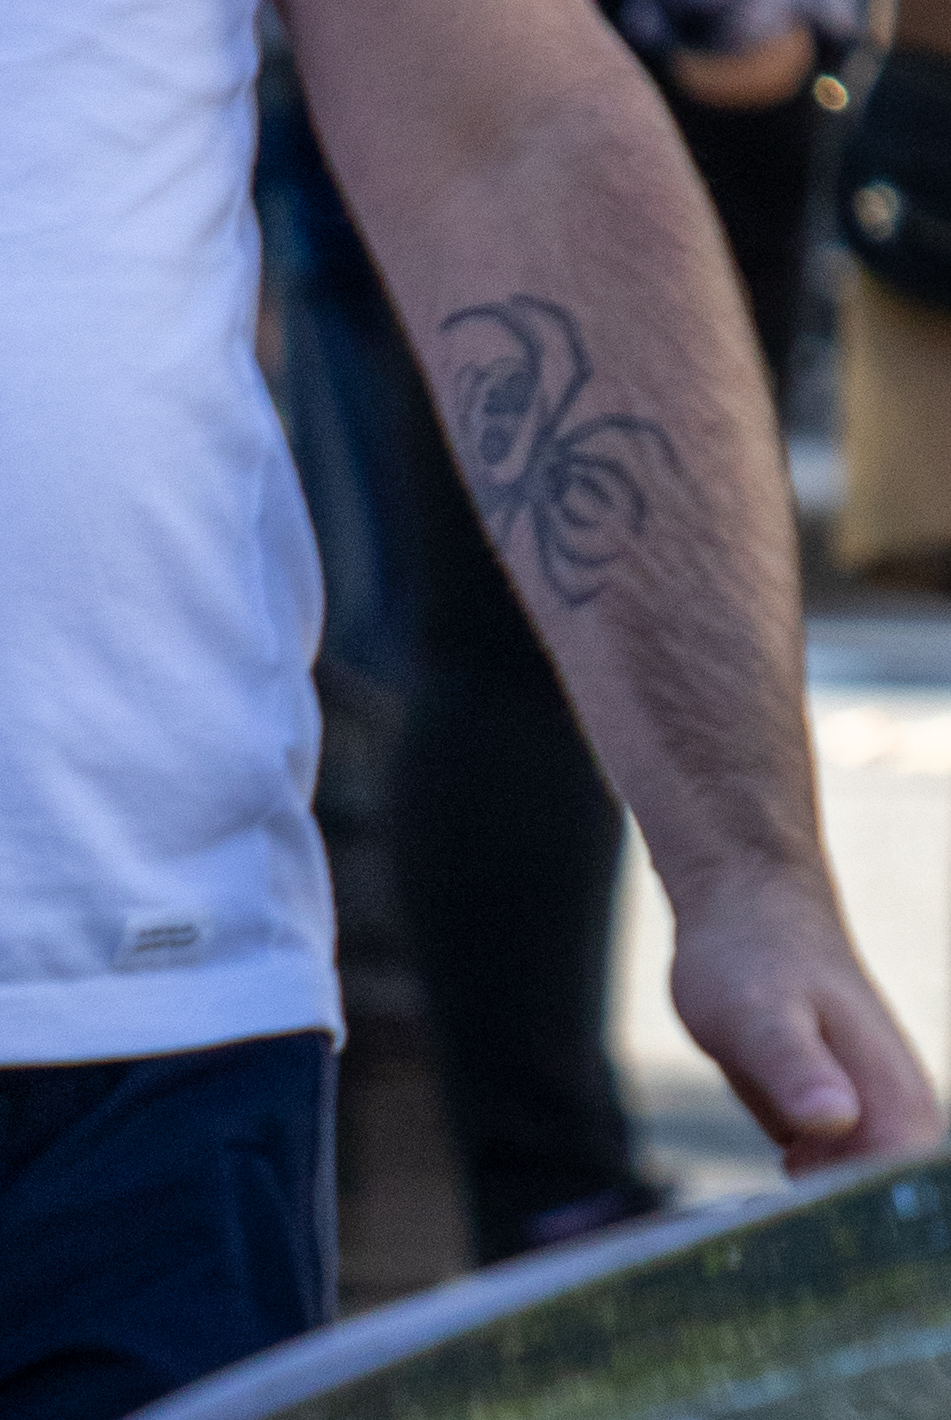 Tattoo spider on the right hand of a man - Ukraine, Odessa, 27.09,2020